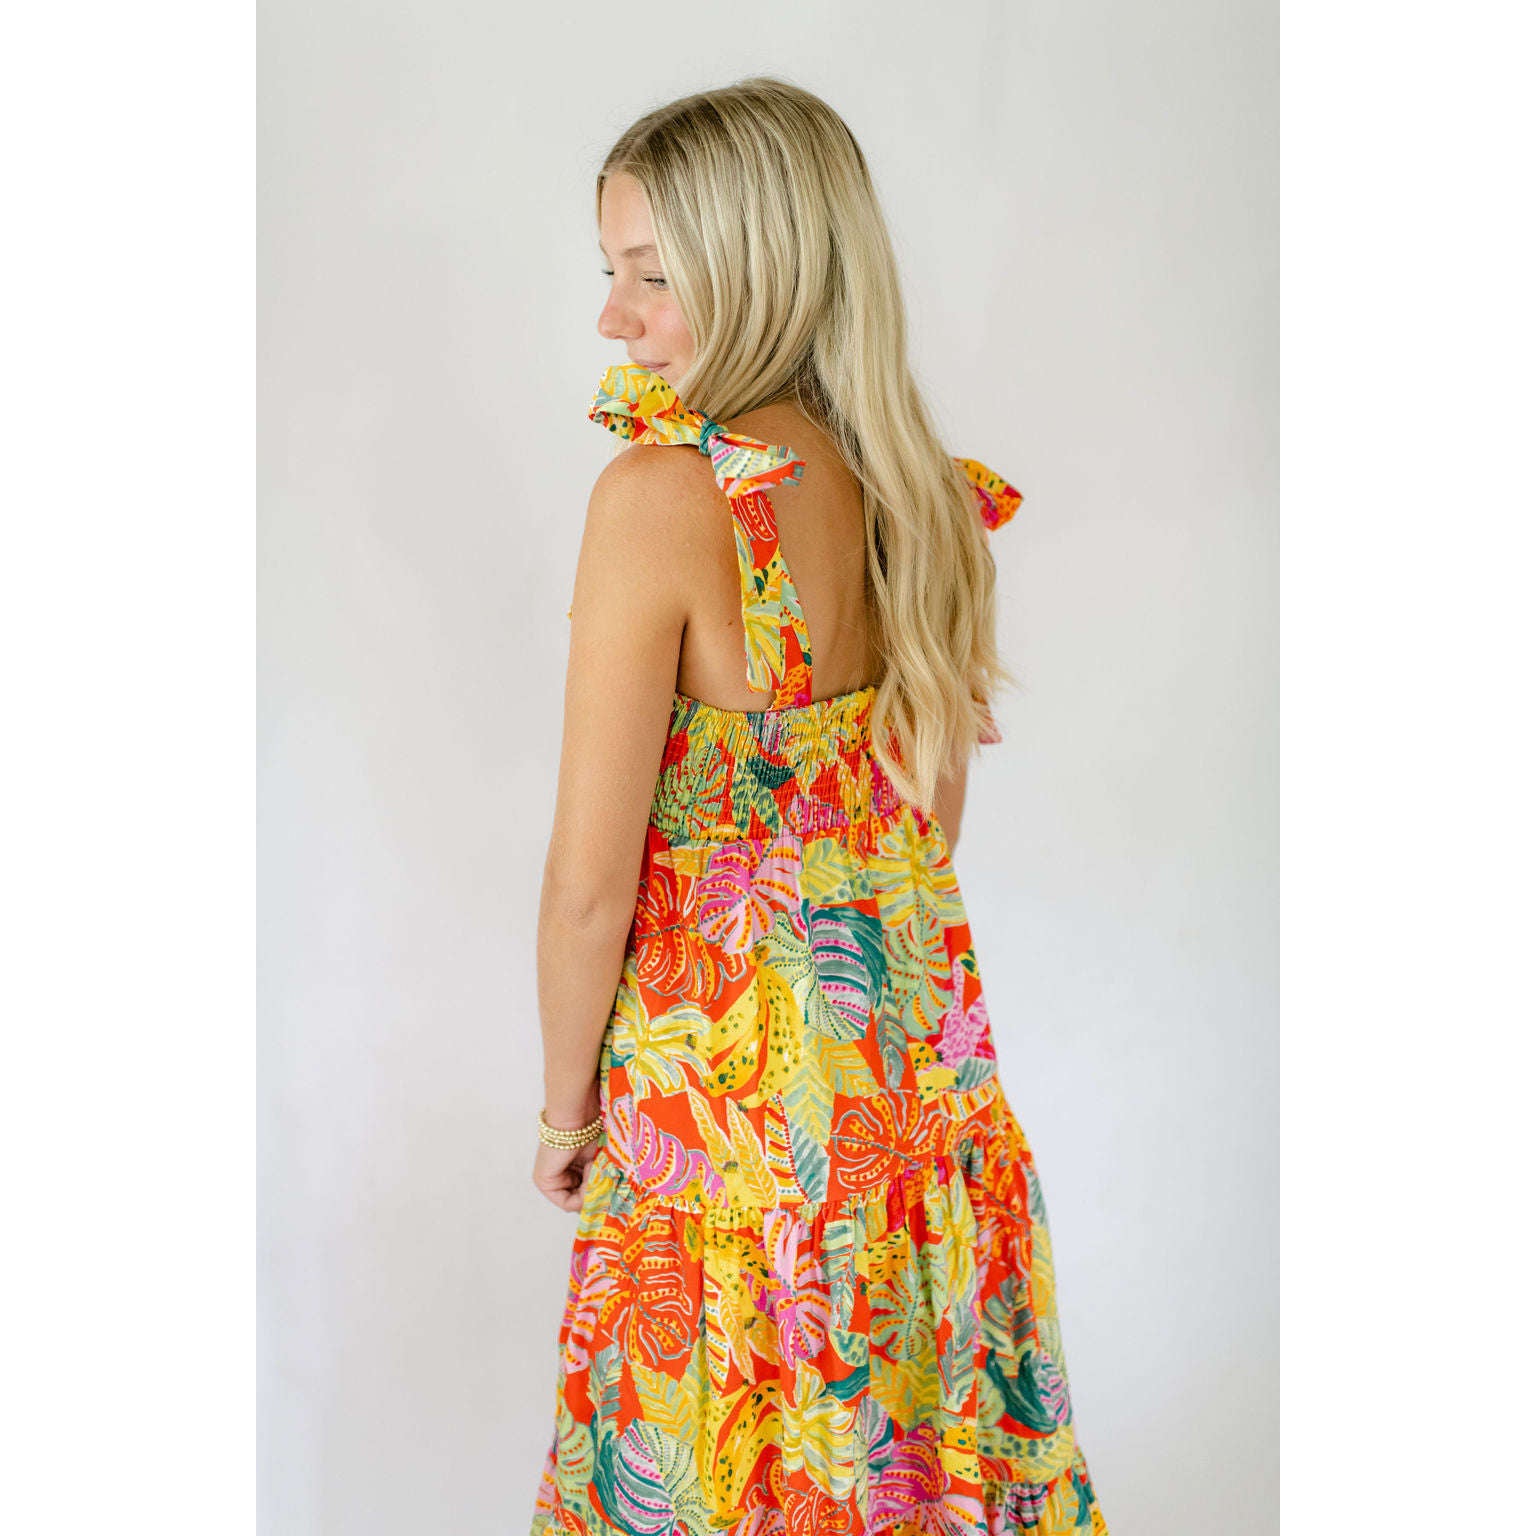 8.28 Boutique:Karlie Clothes,Karlie Tropical Palm Banana Tie Shoulder Maxi Dress,Dress